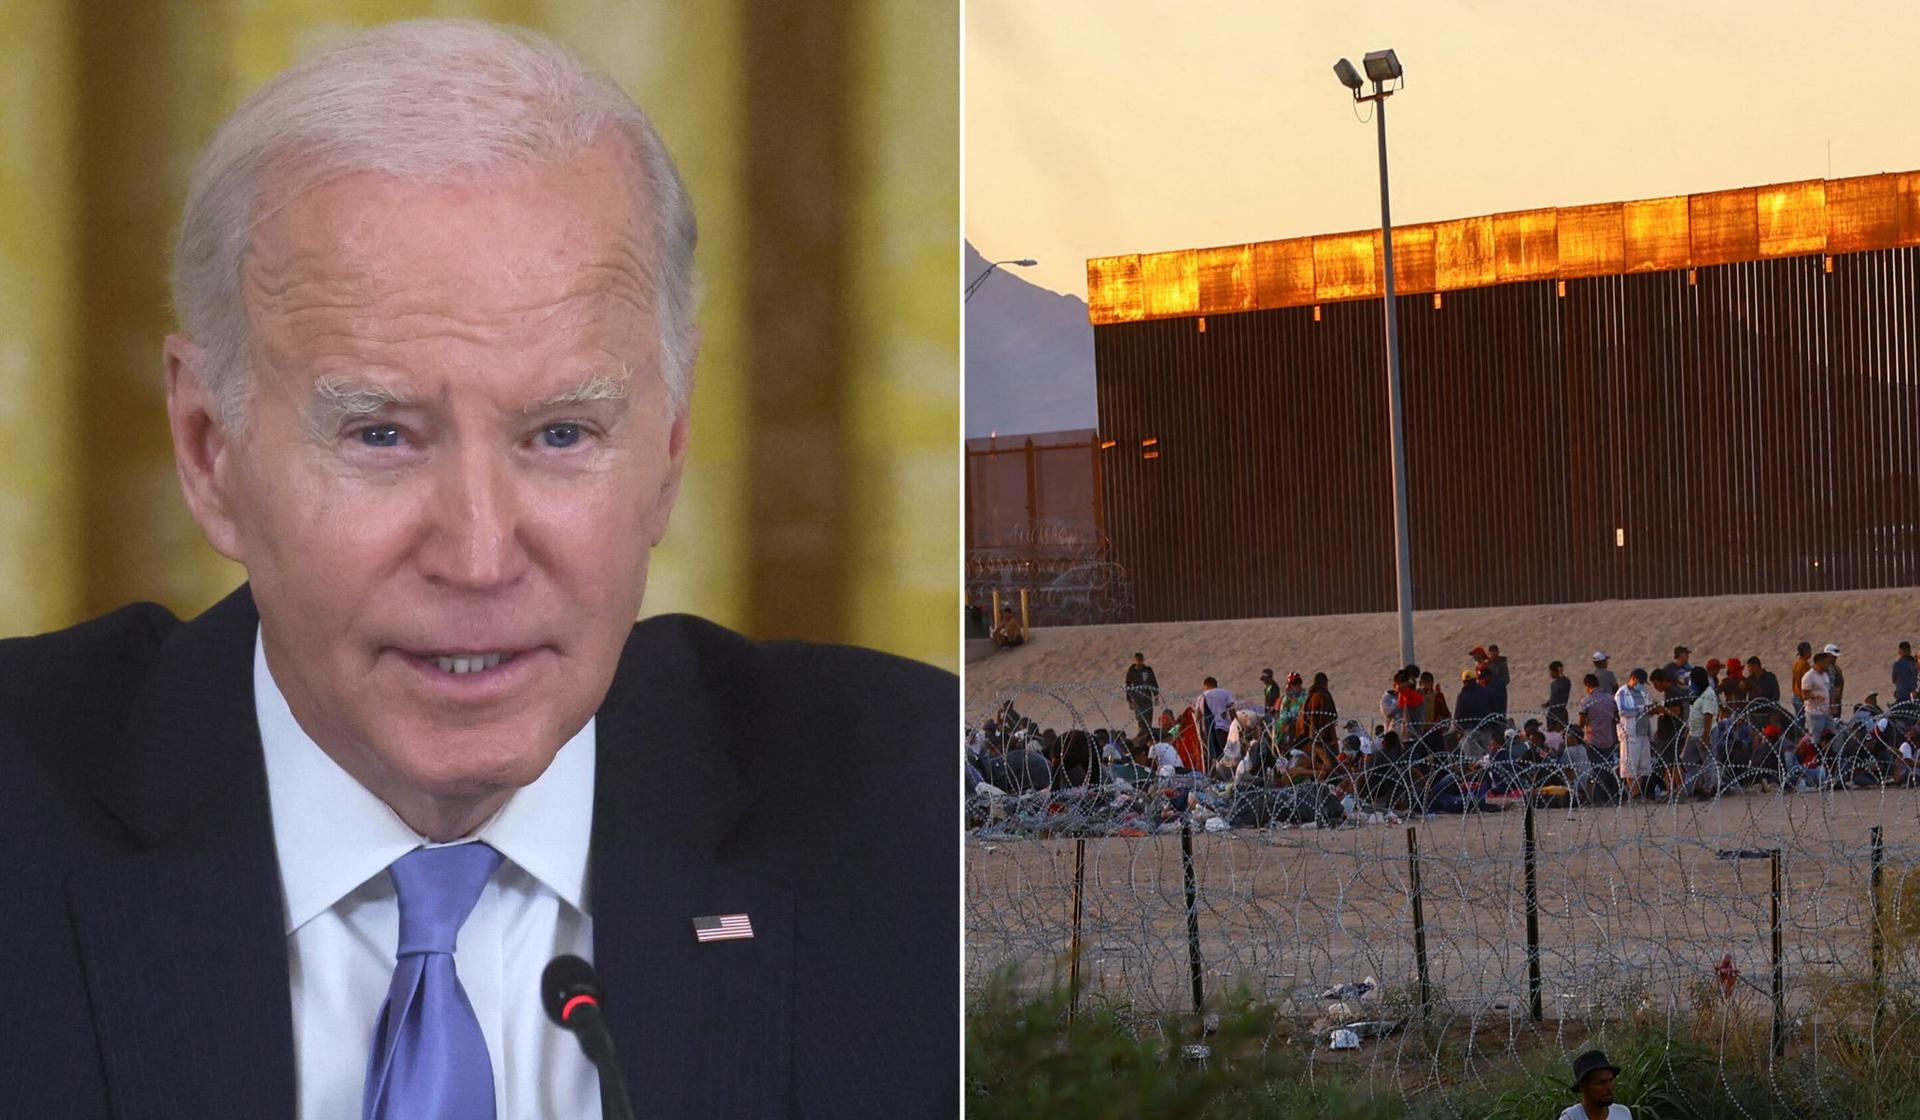 Joe Biden and the border wall seen from Ciudad Juarez, Mexico.